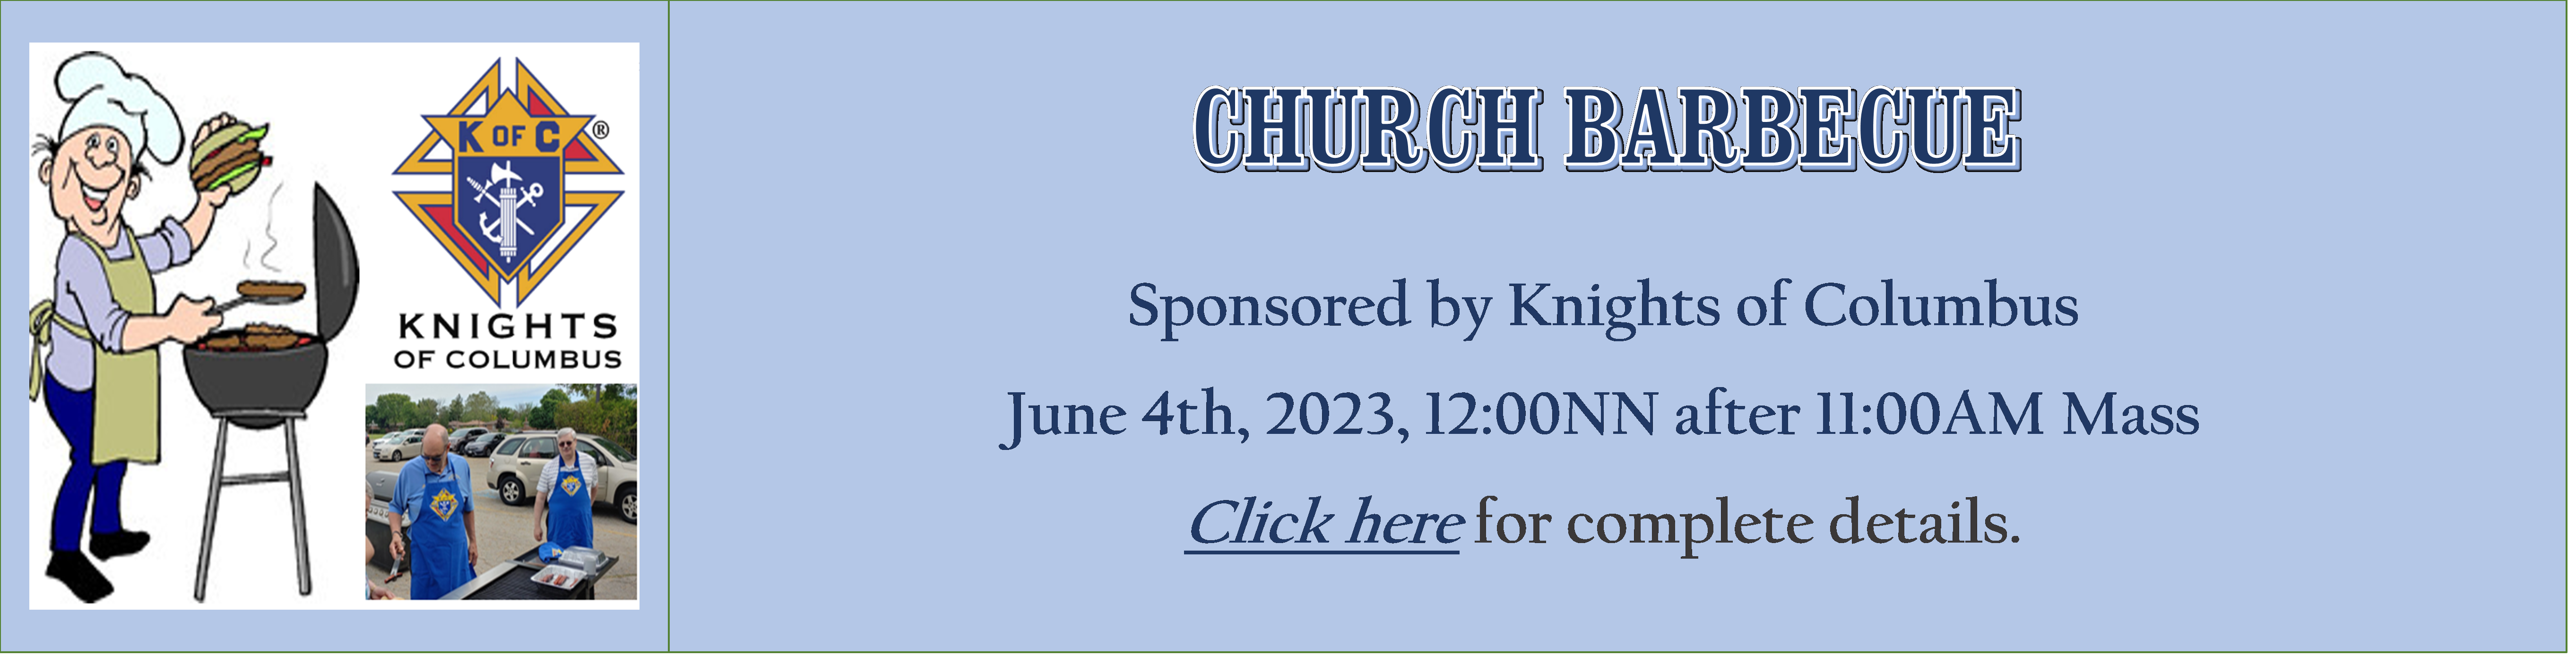 Church Barbecue 2023